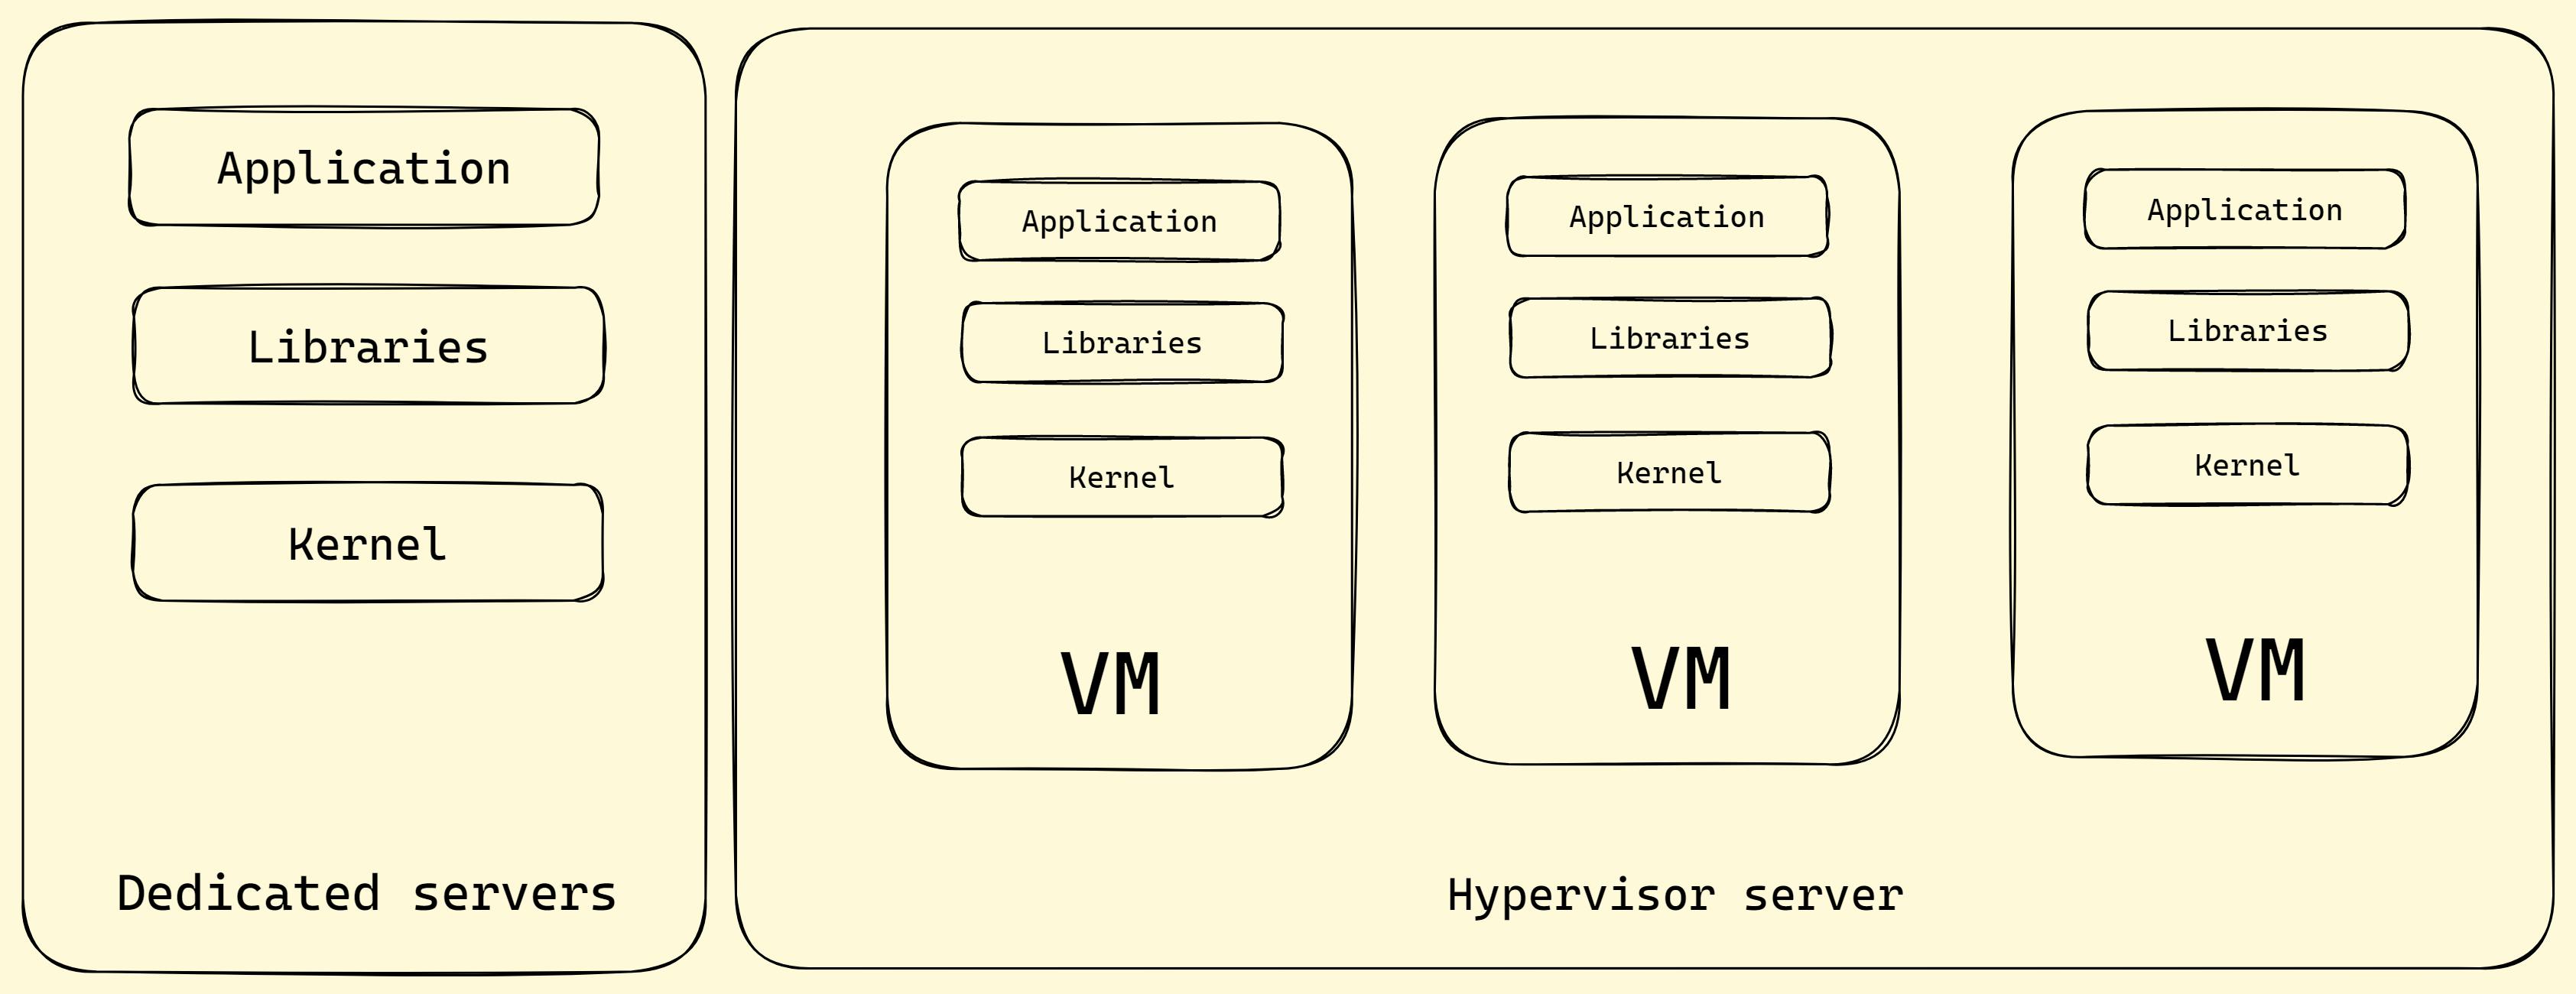 Dedicated servers vs Virtualization